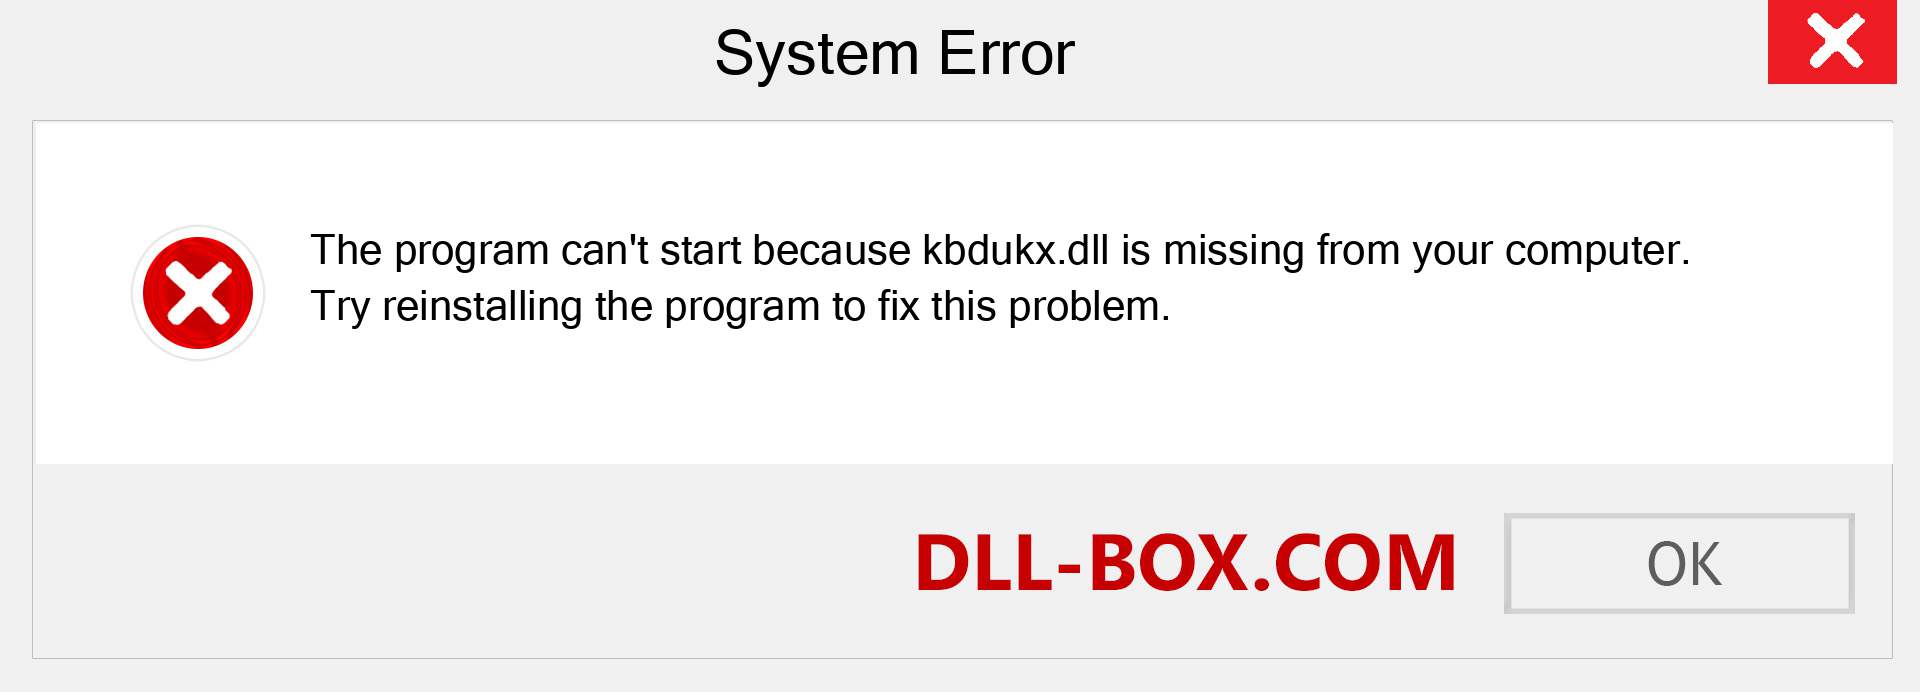  kbdukx.dll file is missing?. Download for Windows 7, 8, 10 - Fix  kbdukx dll Missing Error on Windows, photos, images